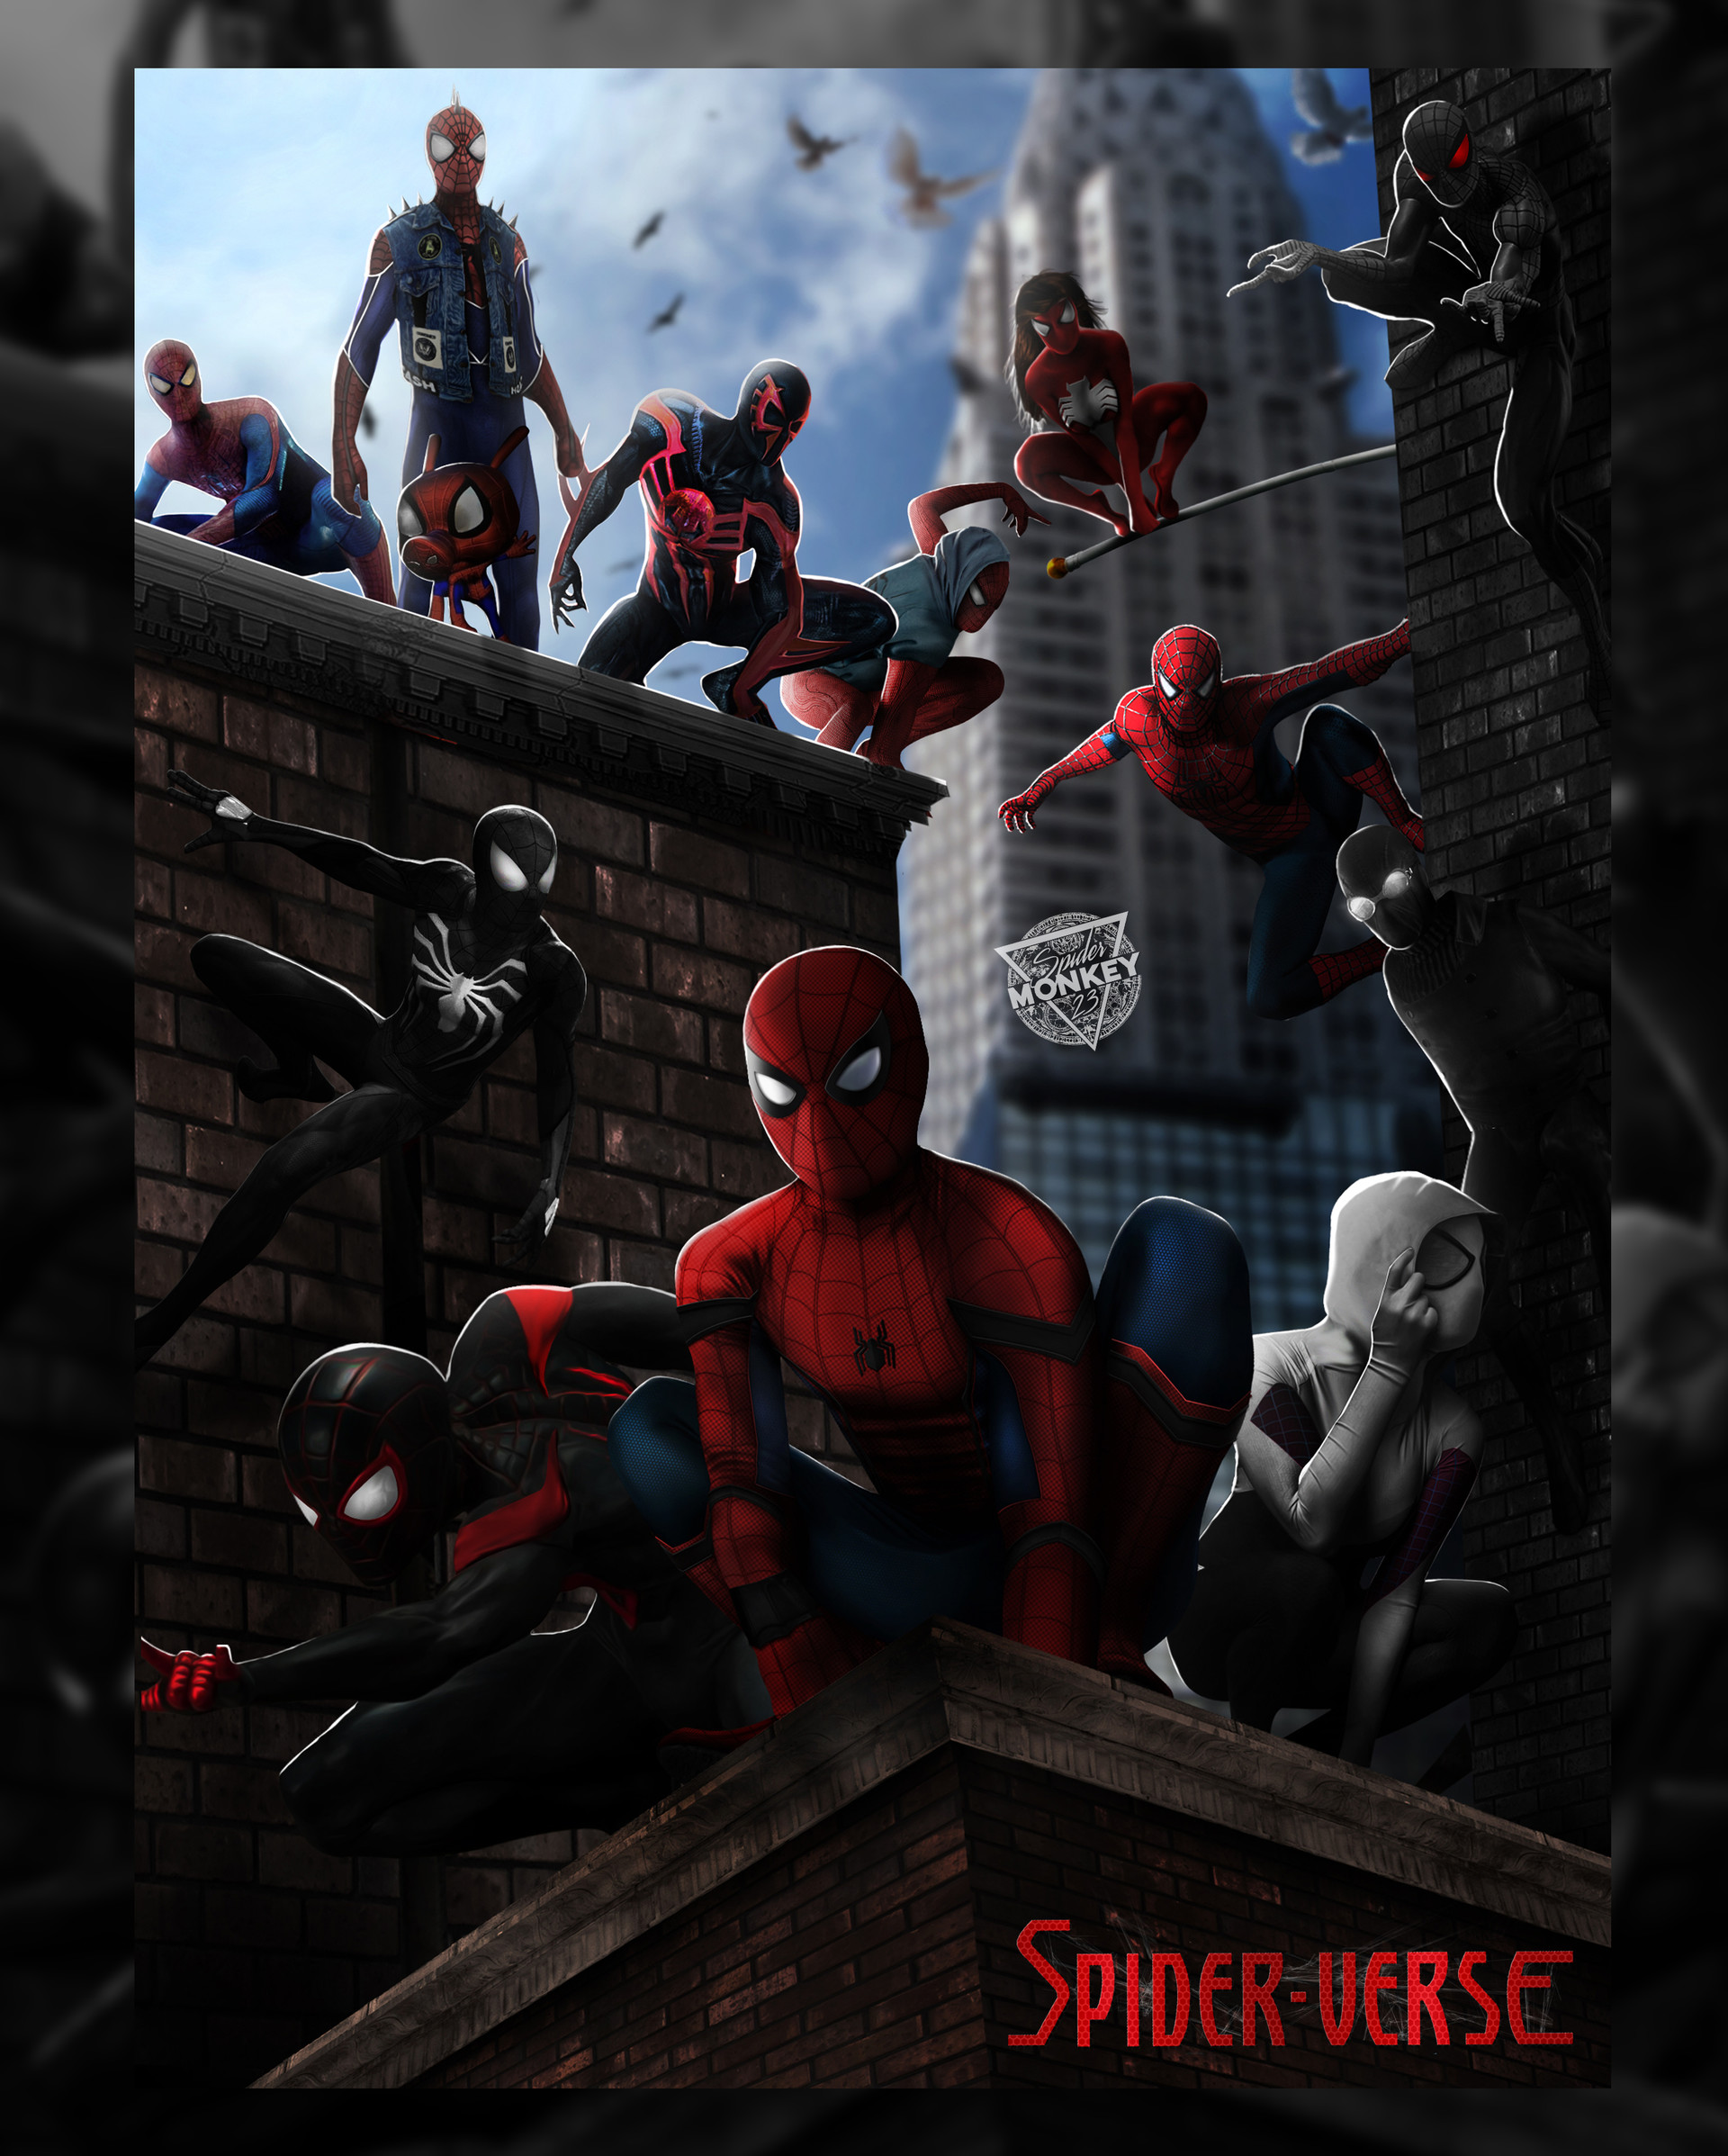 ArtStation - Spider-verse poster, SPDRMNKY XXIII